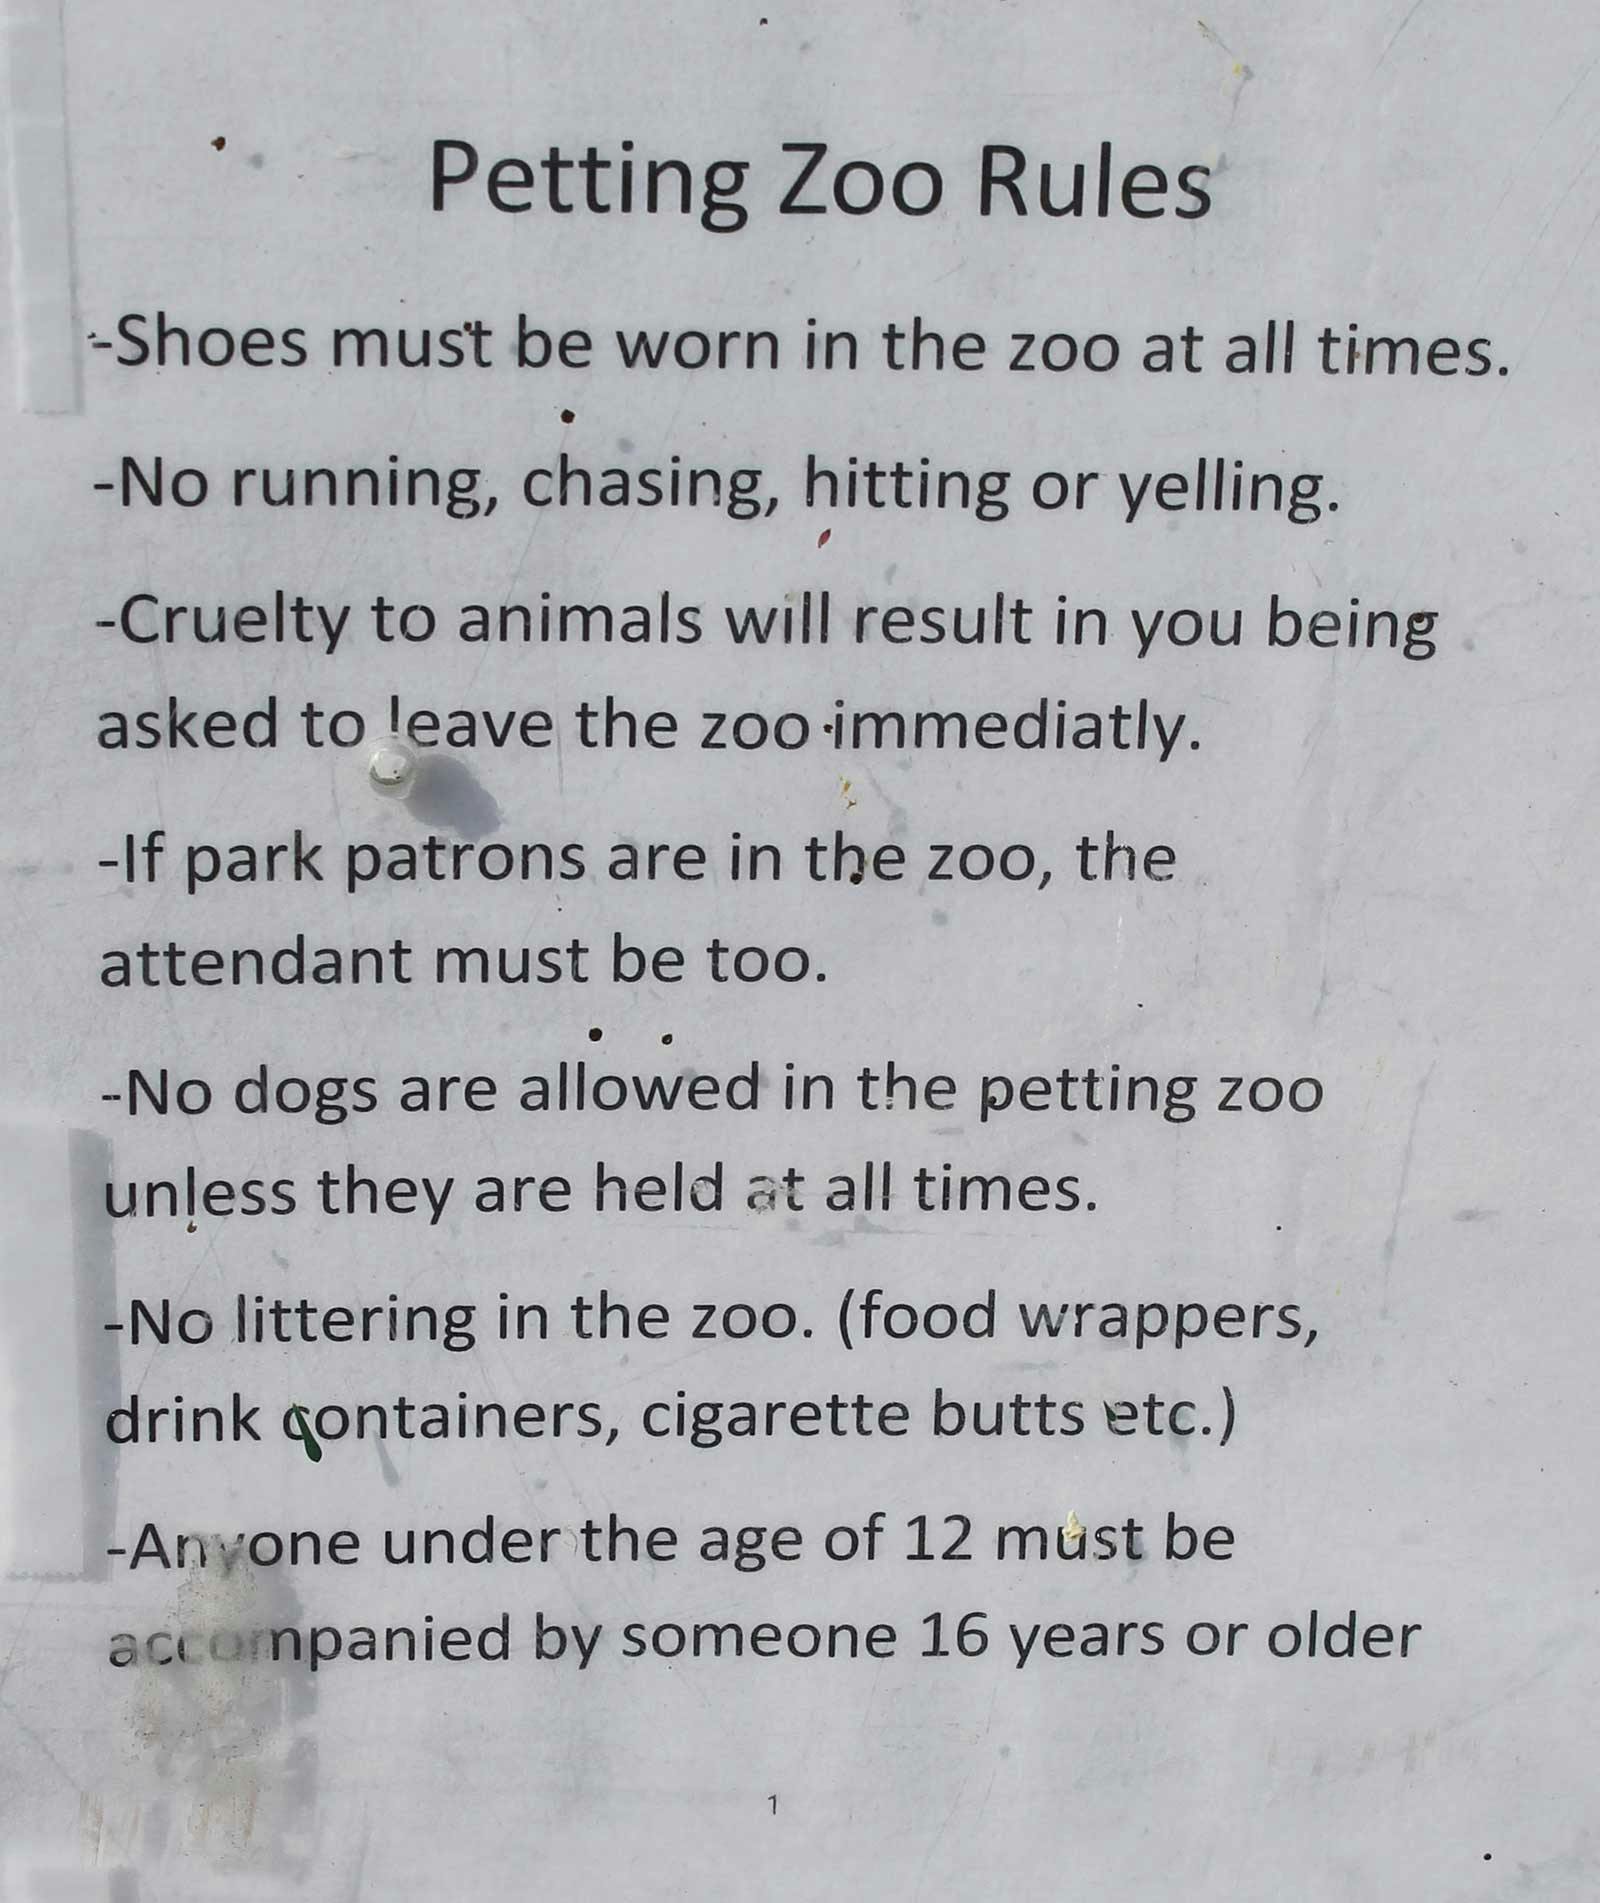 Petting Zoo Image